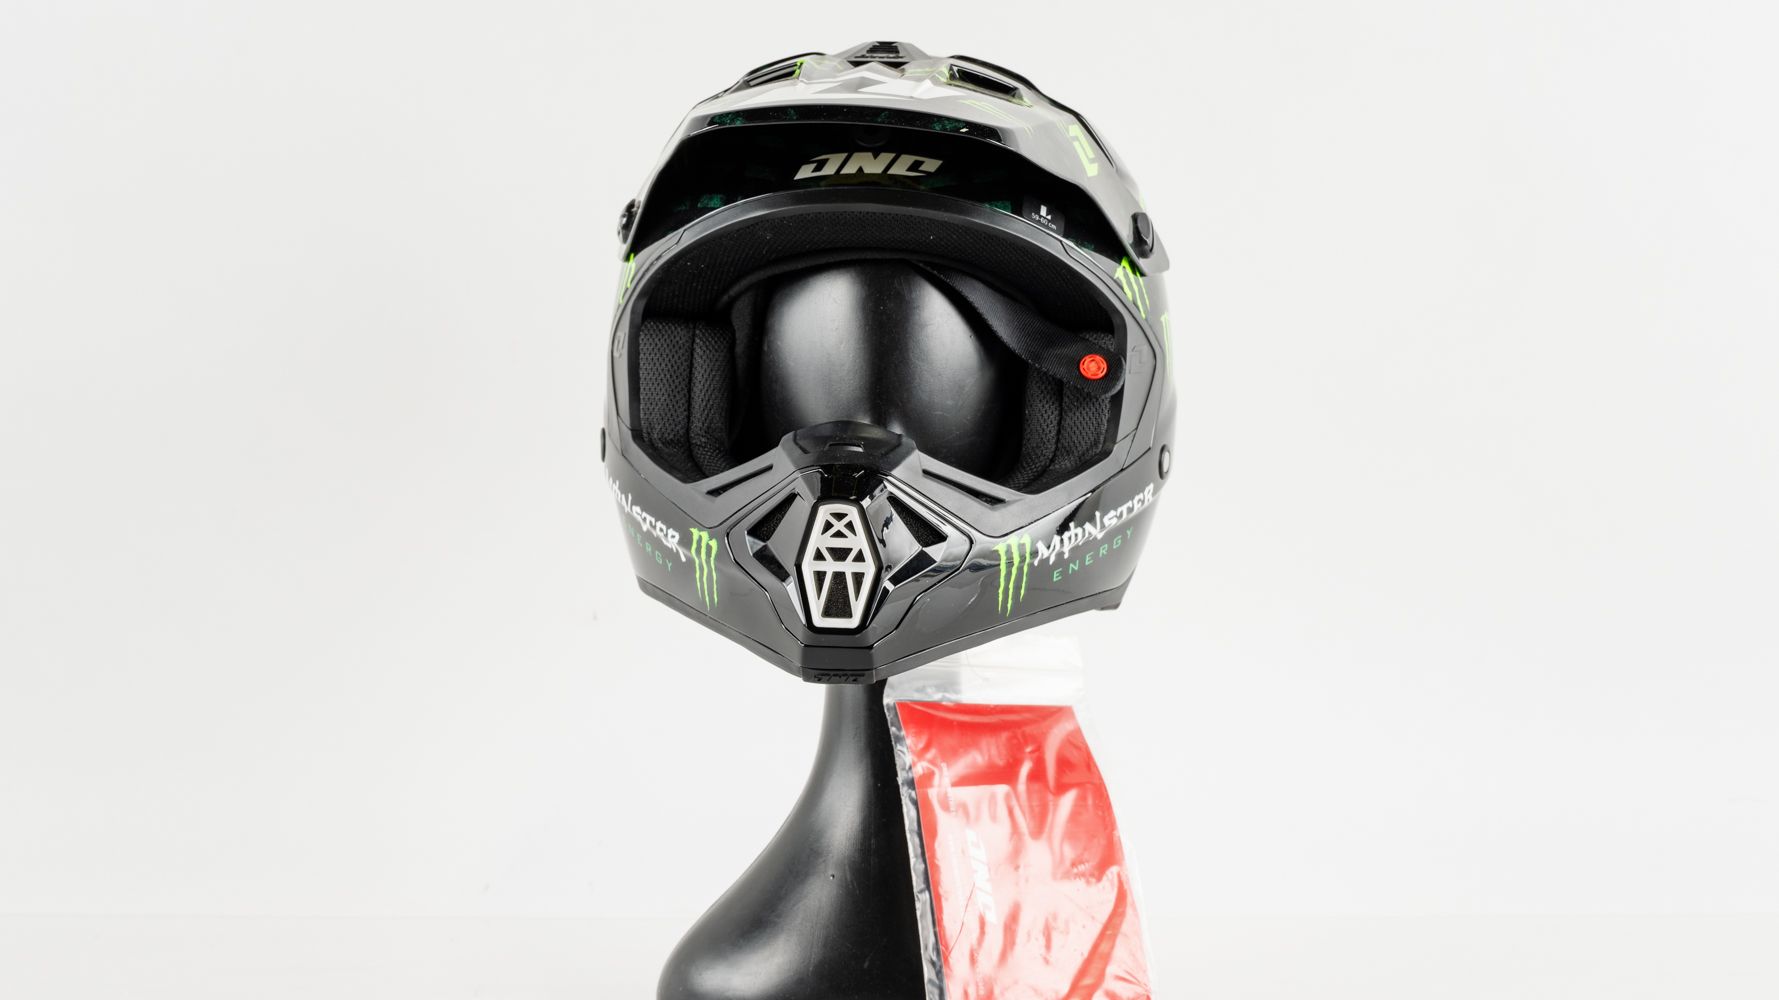 InitialD Store Motorcycle Reflective Monster Energy Racing Helmet